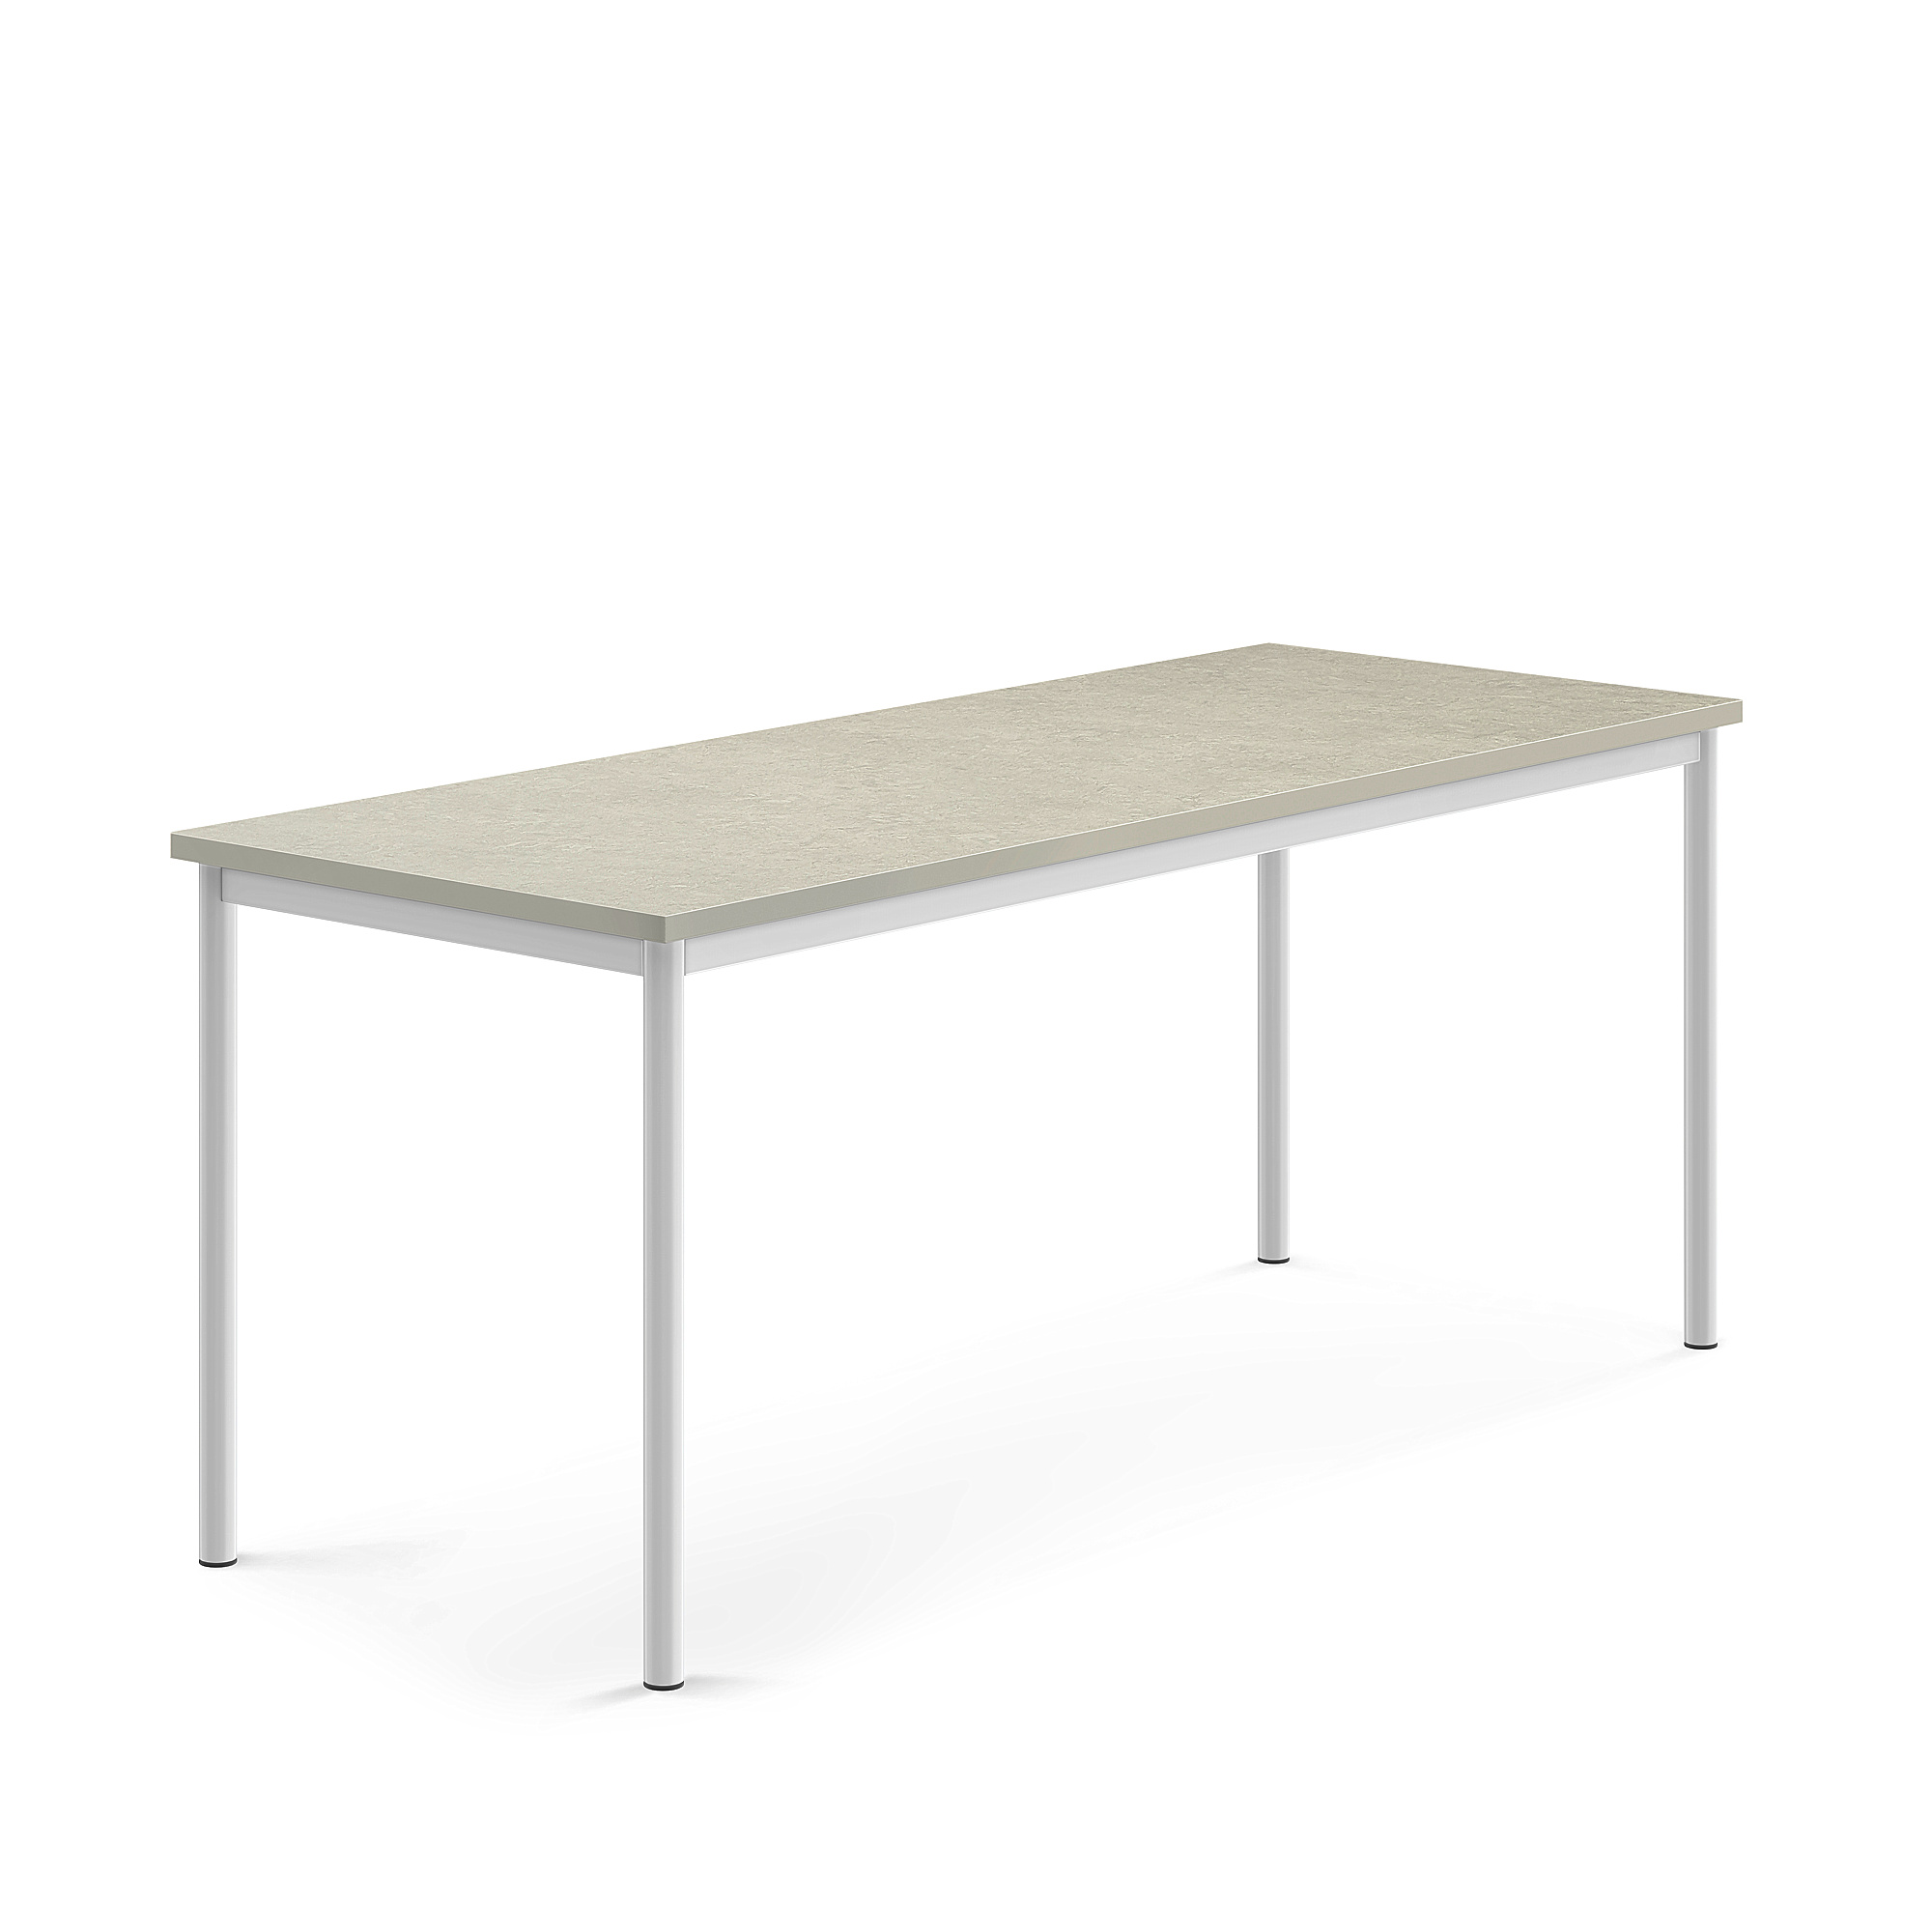 Stůl SONITUS, 1800x700x720 mm, bílé nohy, deska s linoleem, šedá